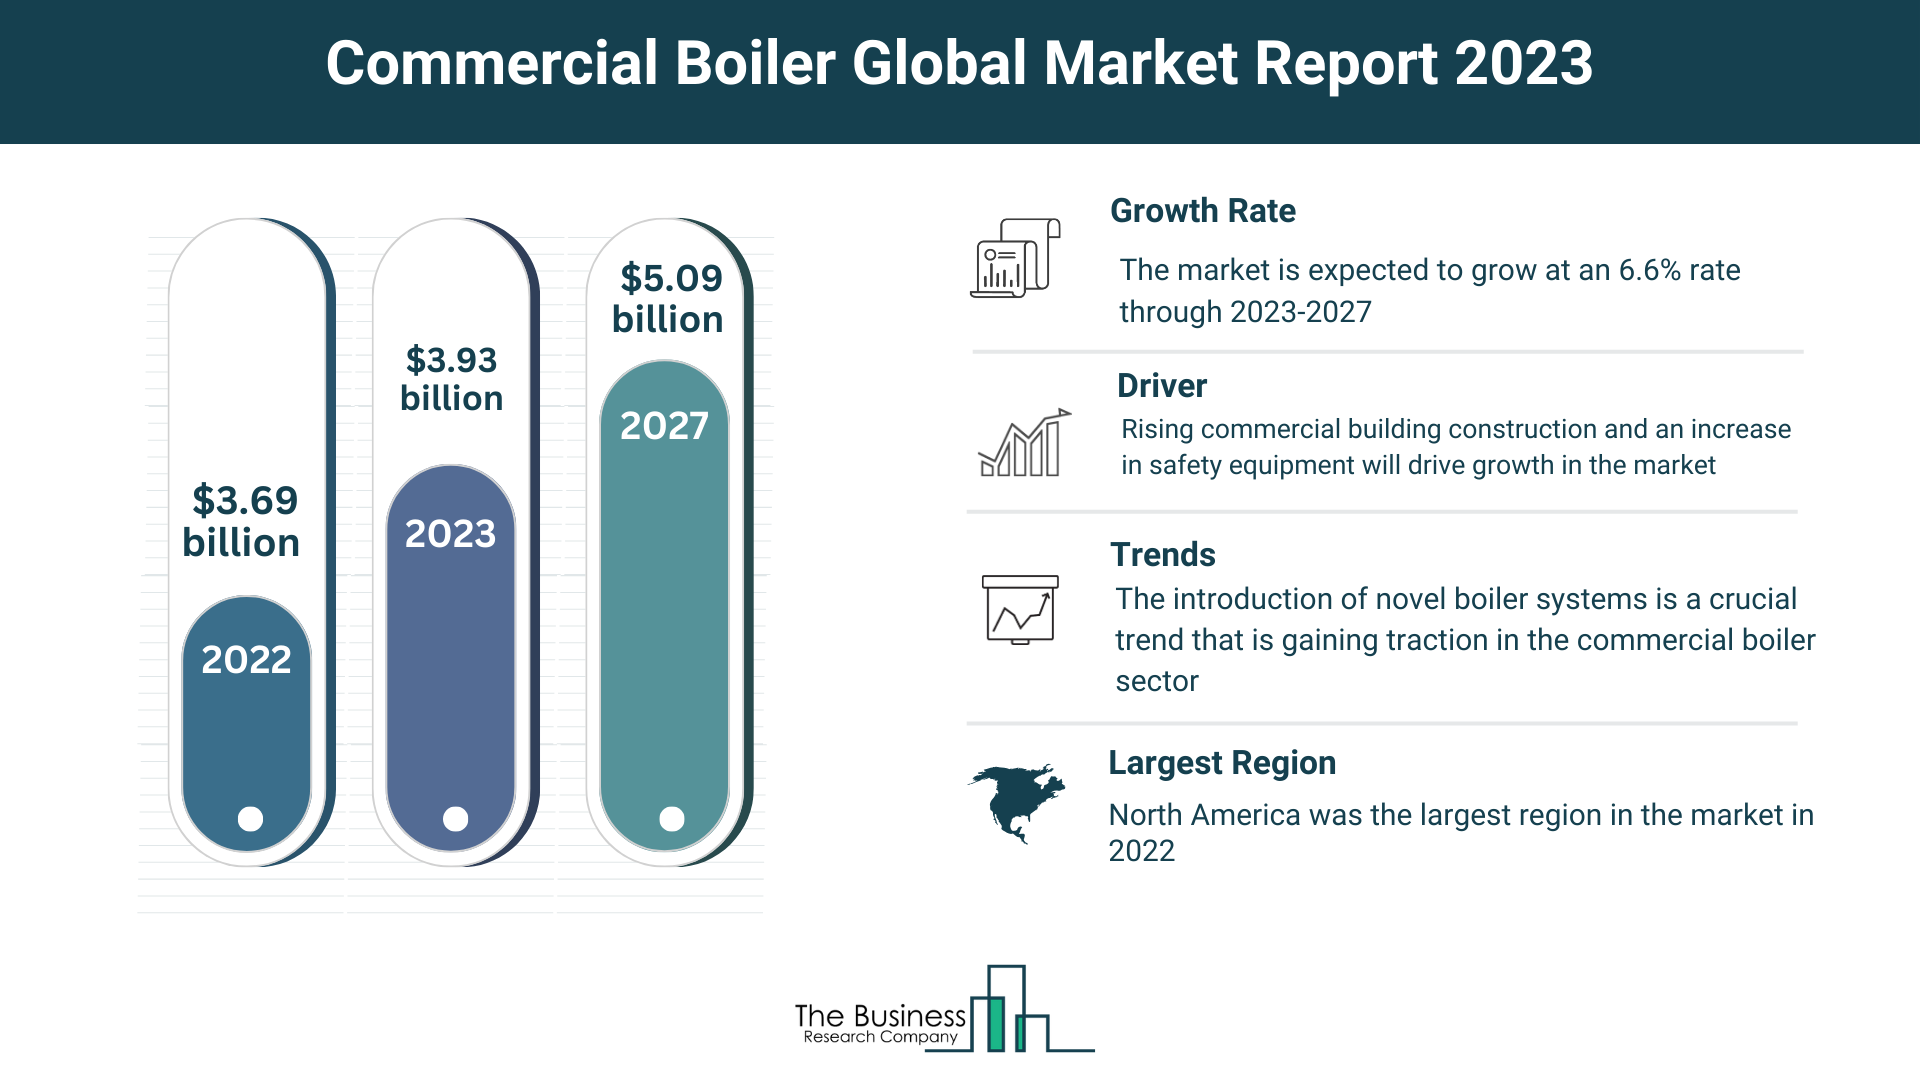 Global Commercial Boiler Market